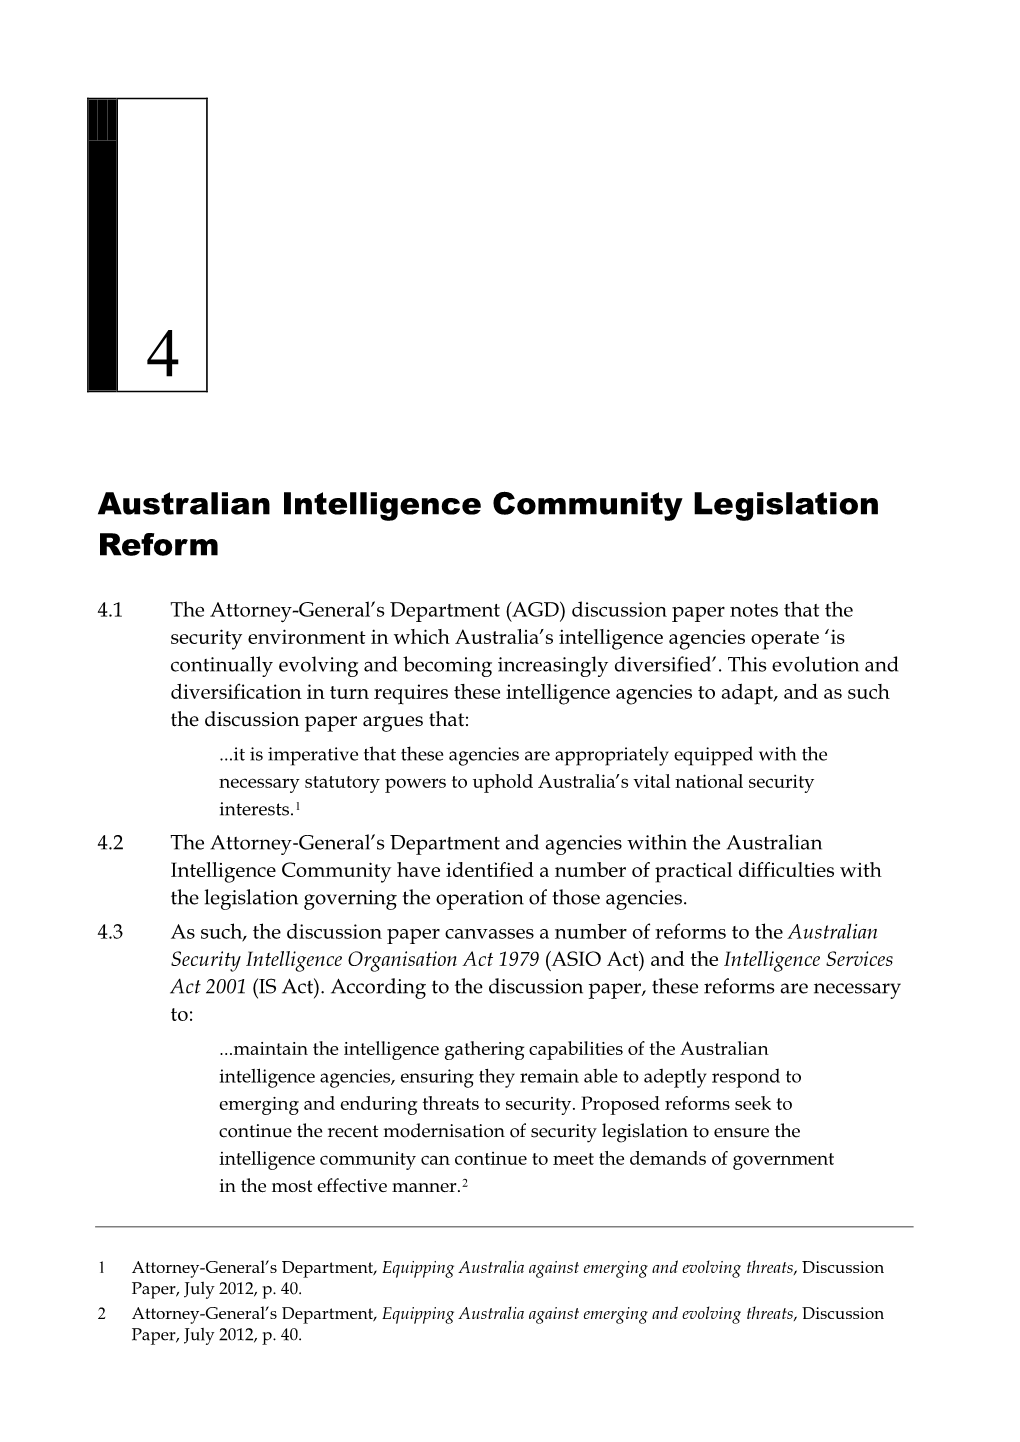 Chapter 4: Australian Intelligence Community Legislation Reform